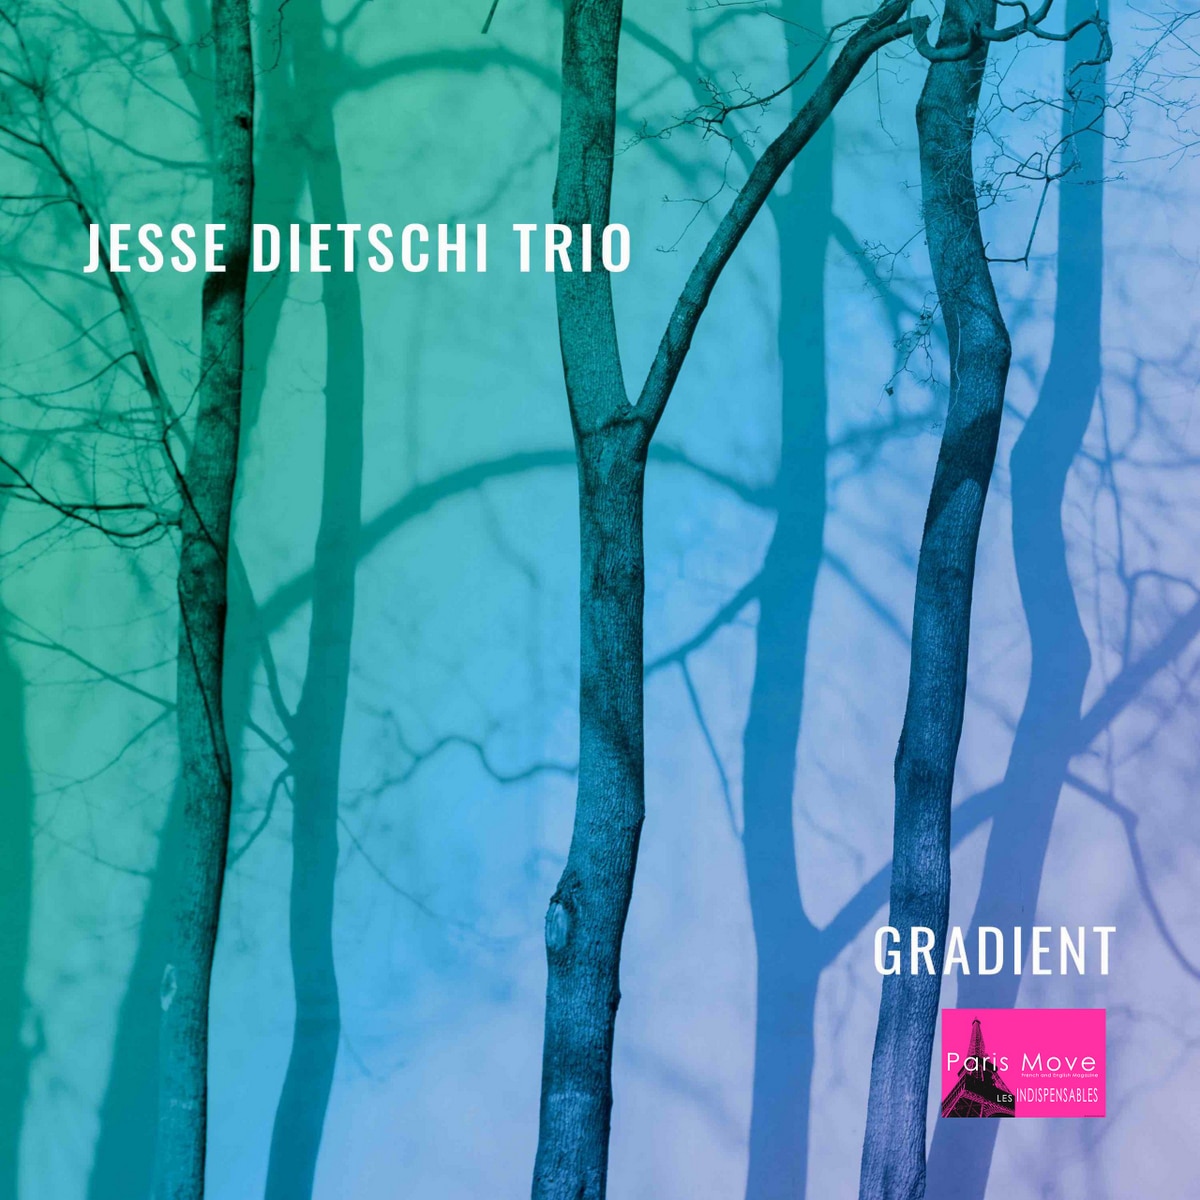 Jesse Dietschi Trio – Gradient (ENG review)